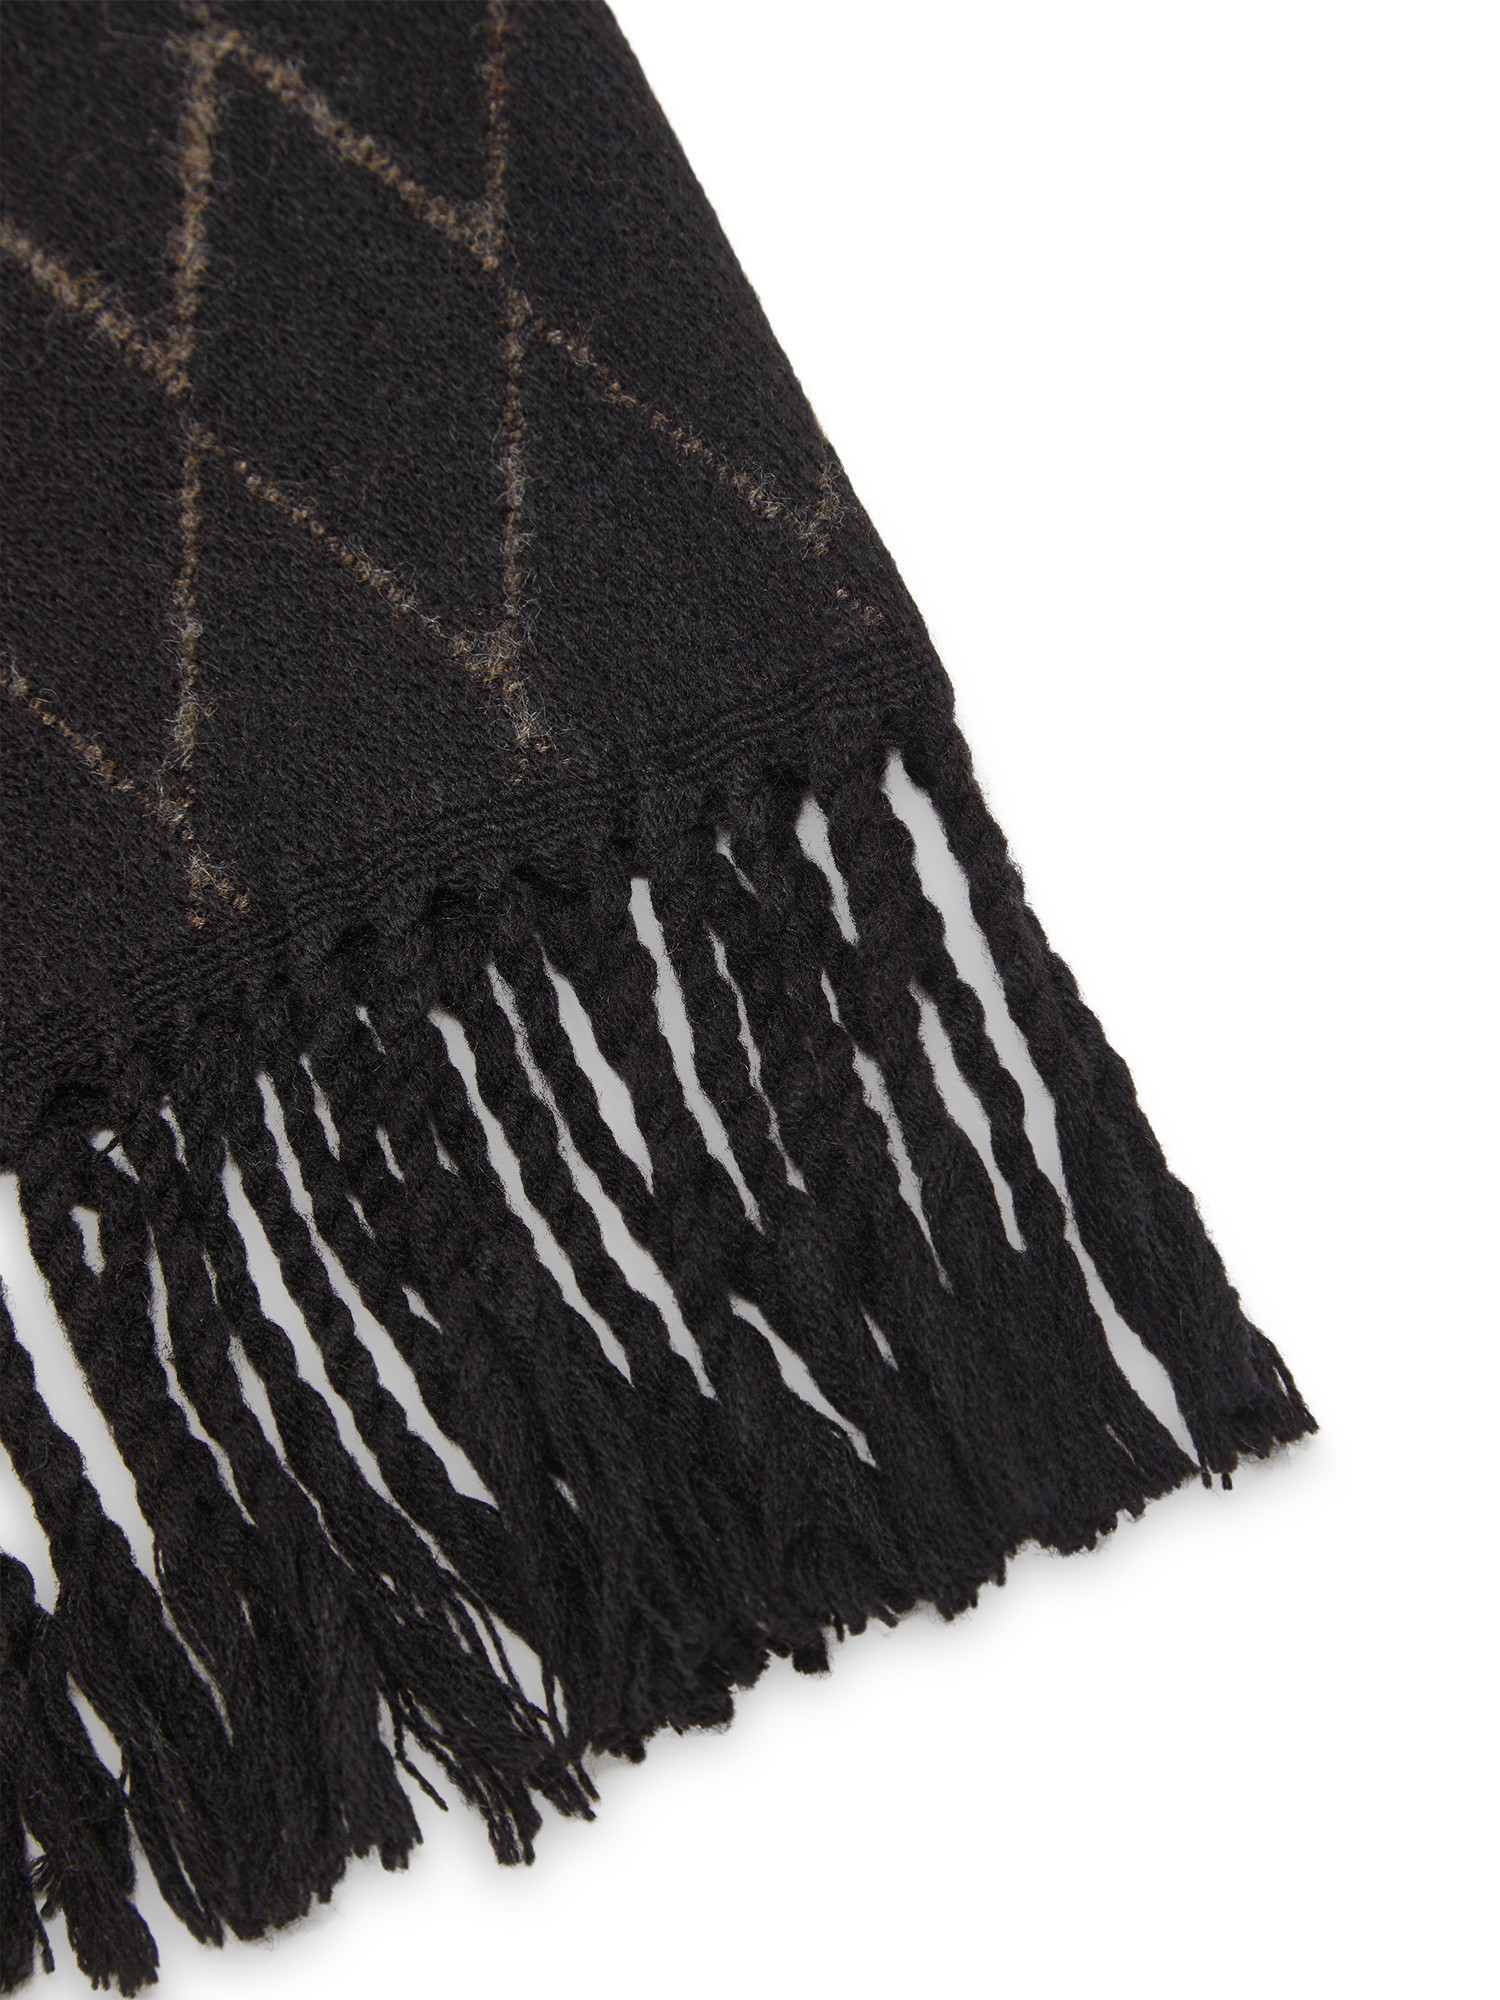 Luca D'Altieri - Fabric scarf, Black / Brown, large image number 1